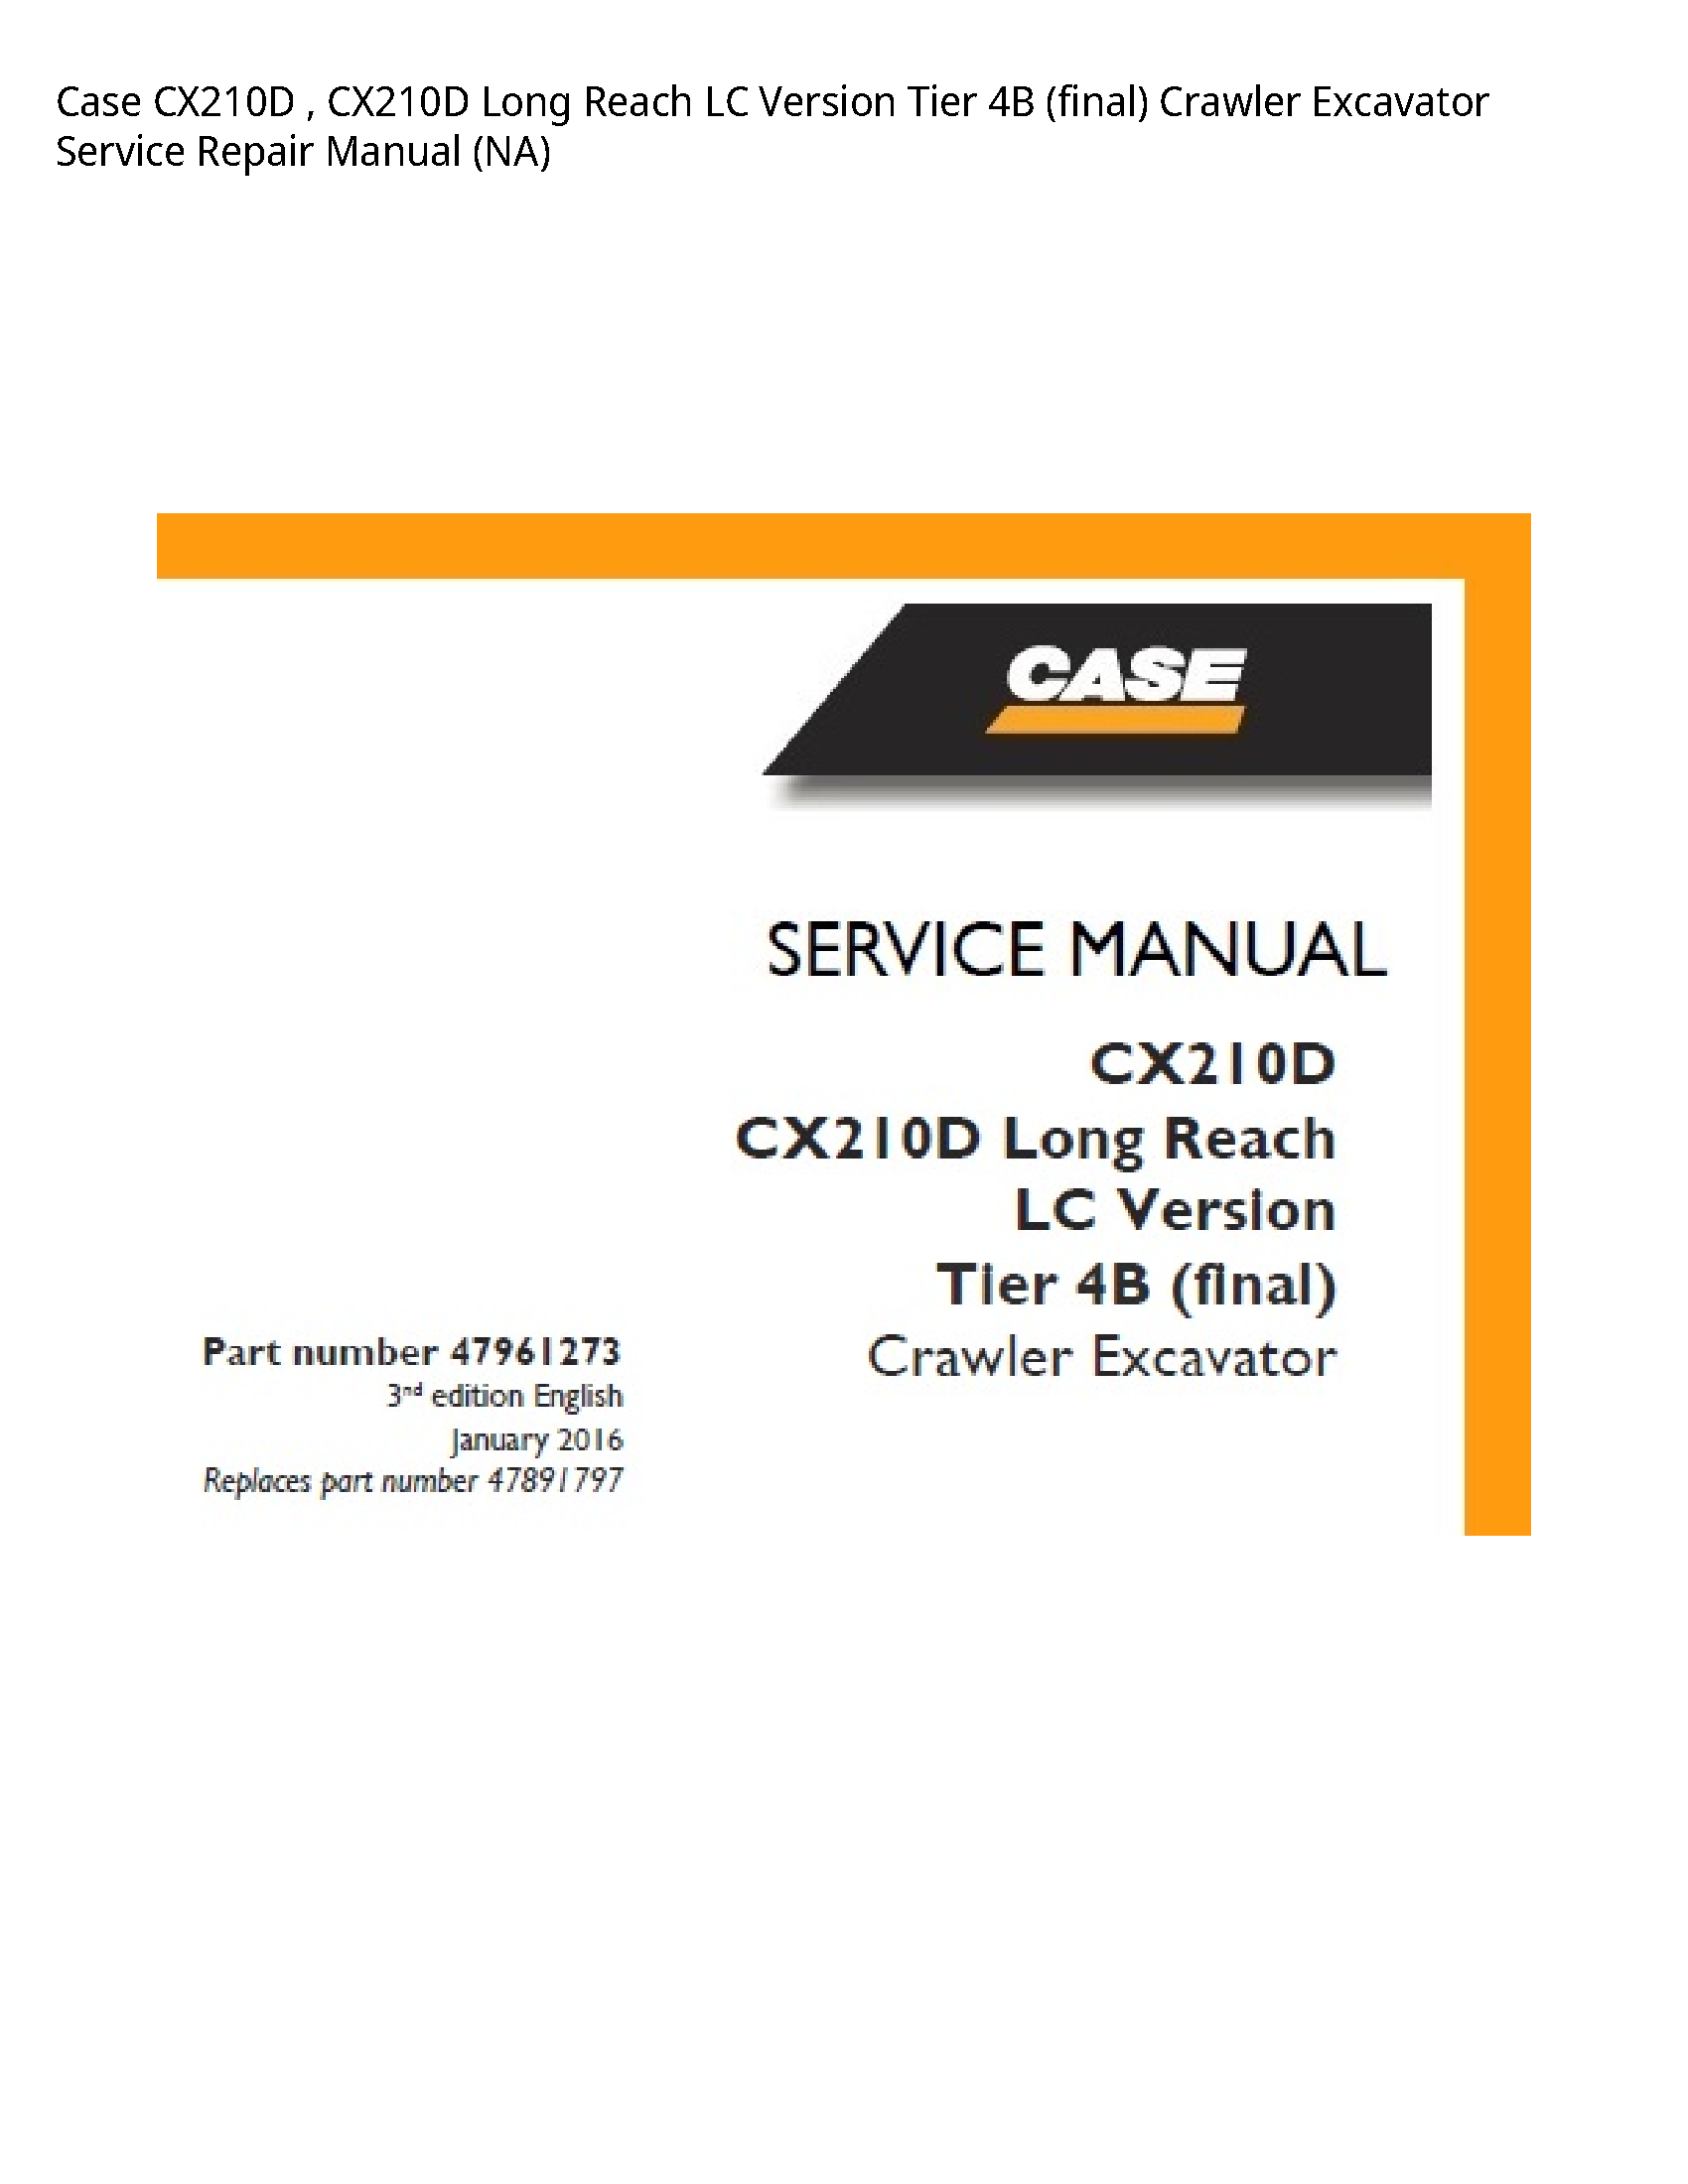 Case/Case IH CX210D Long Reach LC Version Tier (final) Crawler Excavator manual